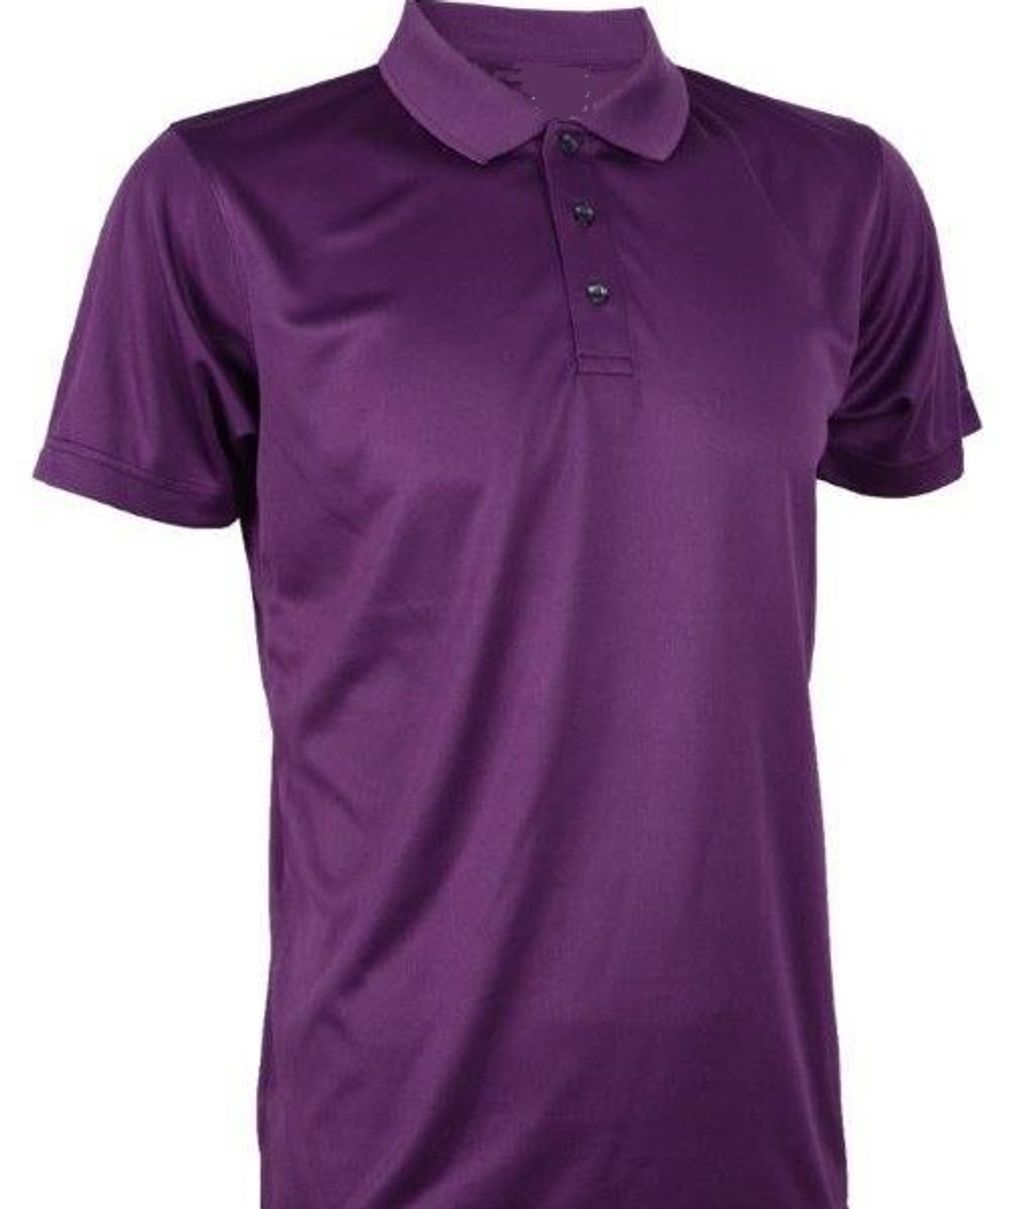 Outrefit Microfiber Collar Polo Shirt Blackberry Purple.jpg